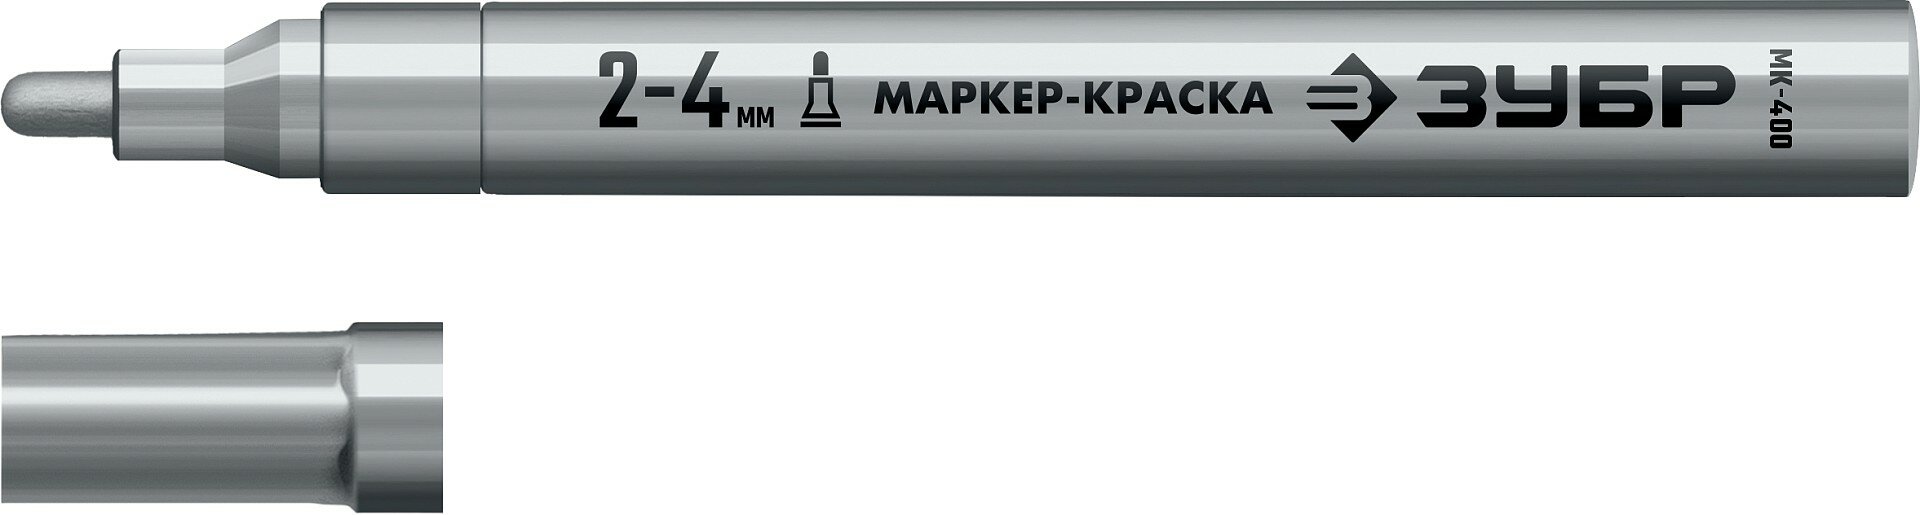 ЗУБР 2 - 4 мм, круглый, серебряный, маркер-краска, Профессионал (06325-1)